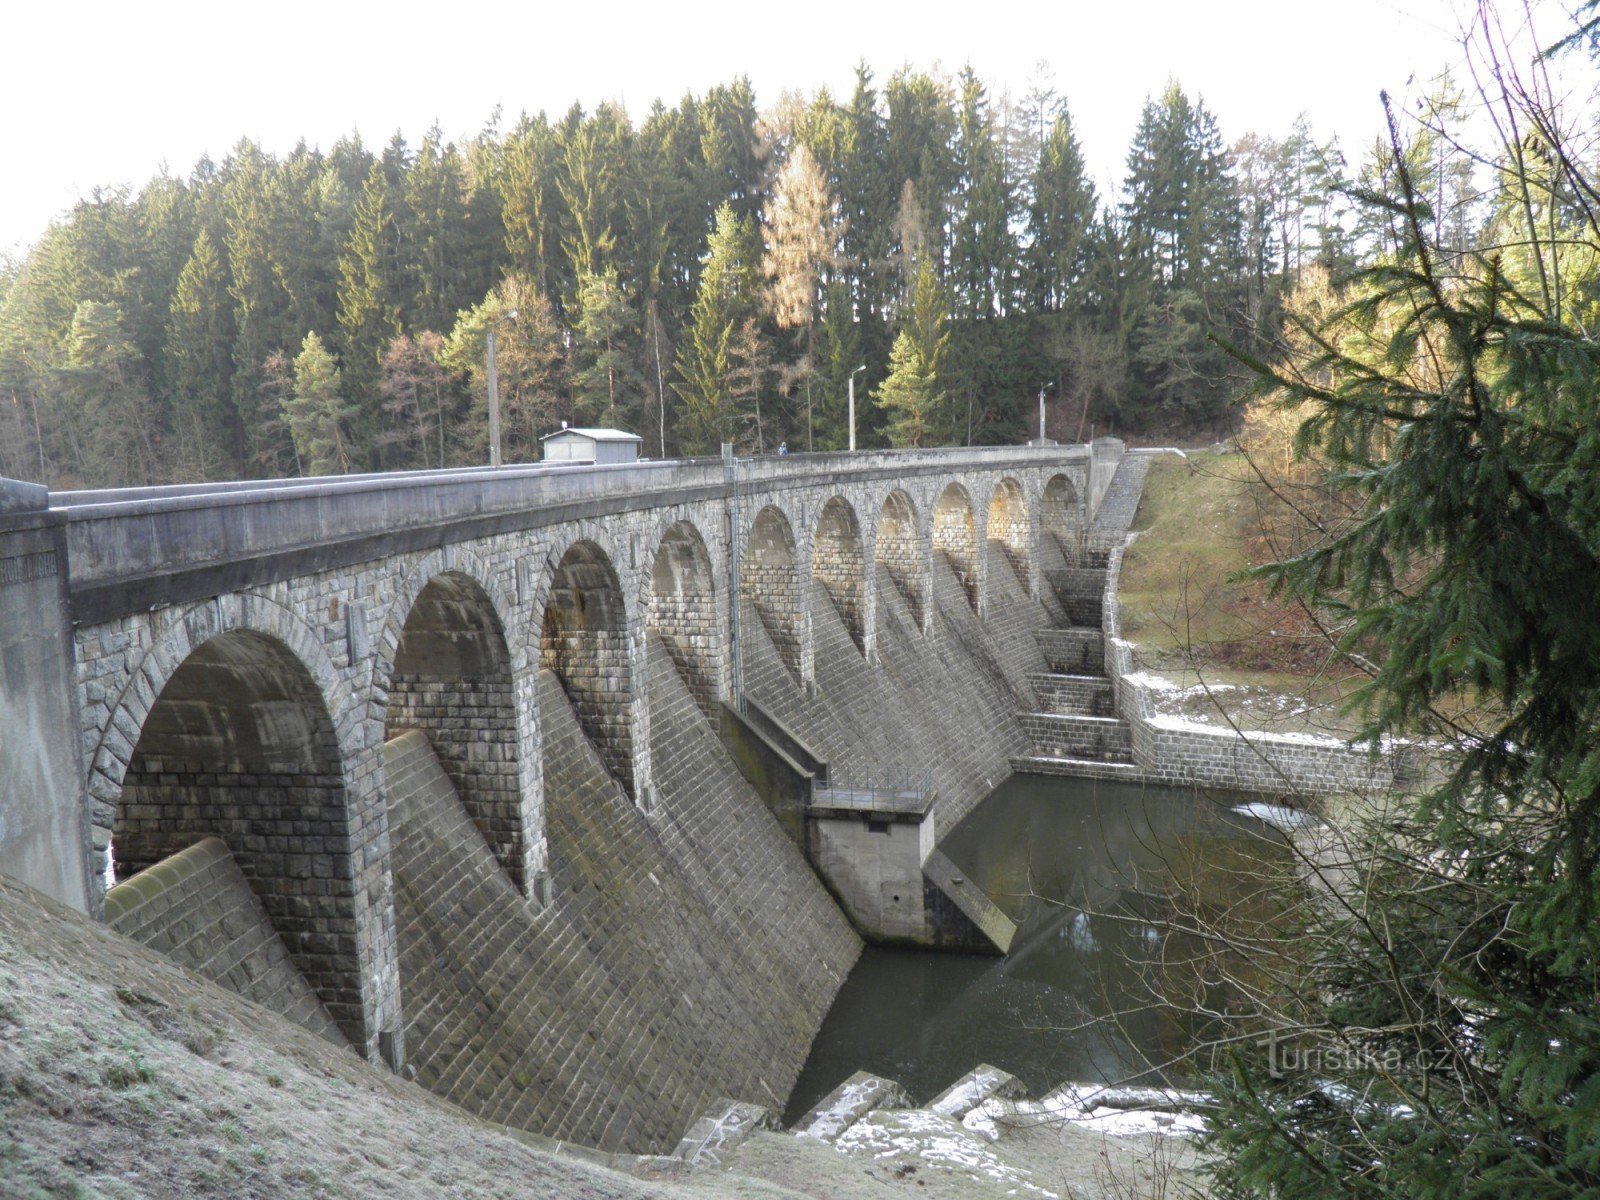 Staudamm Sedlická im Winter.